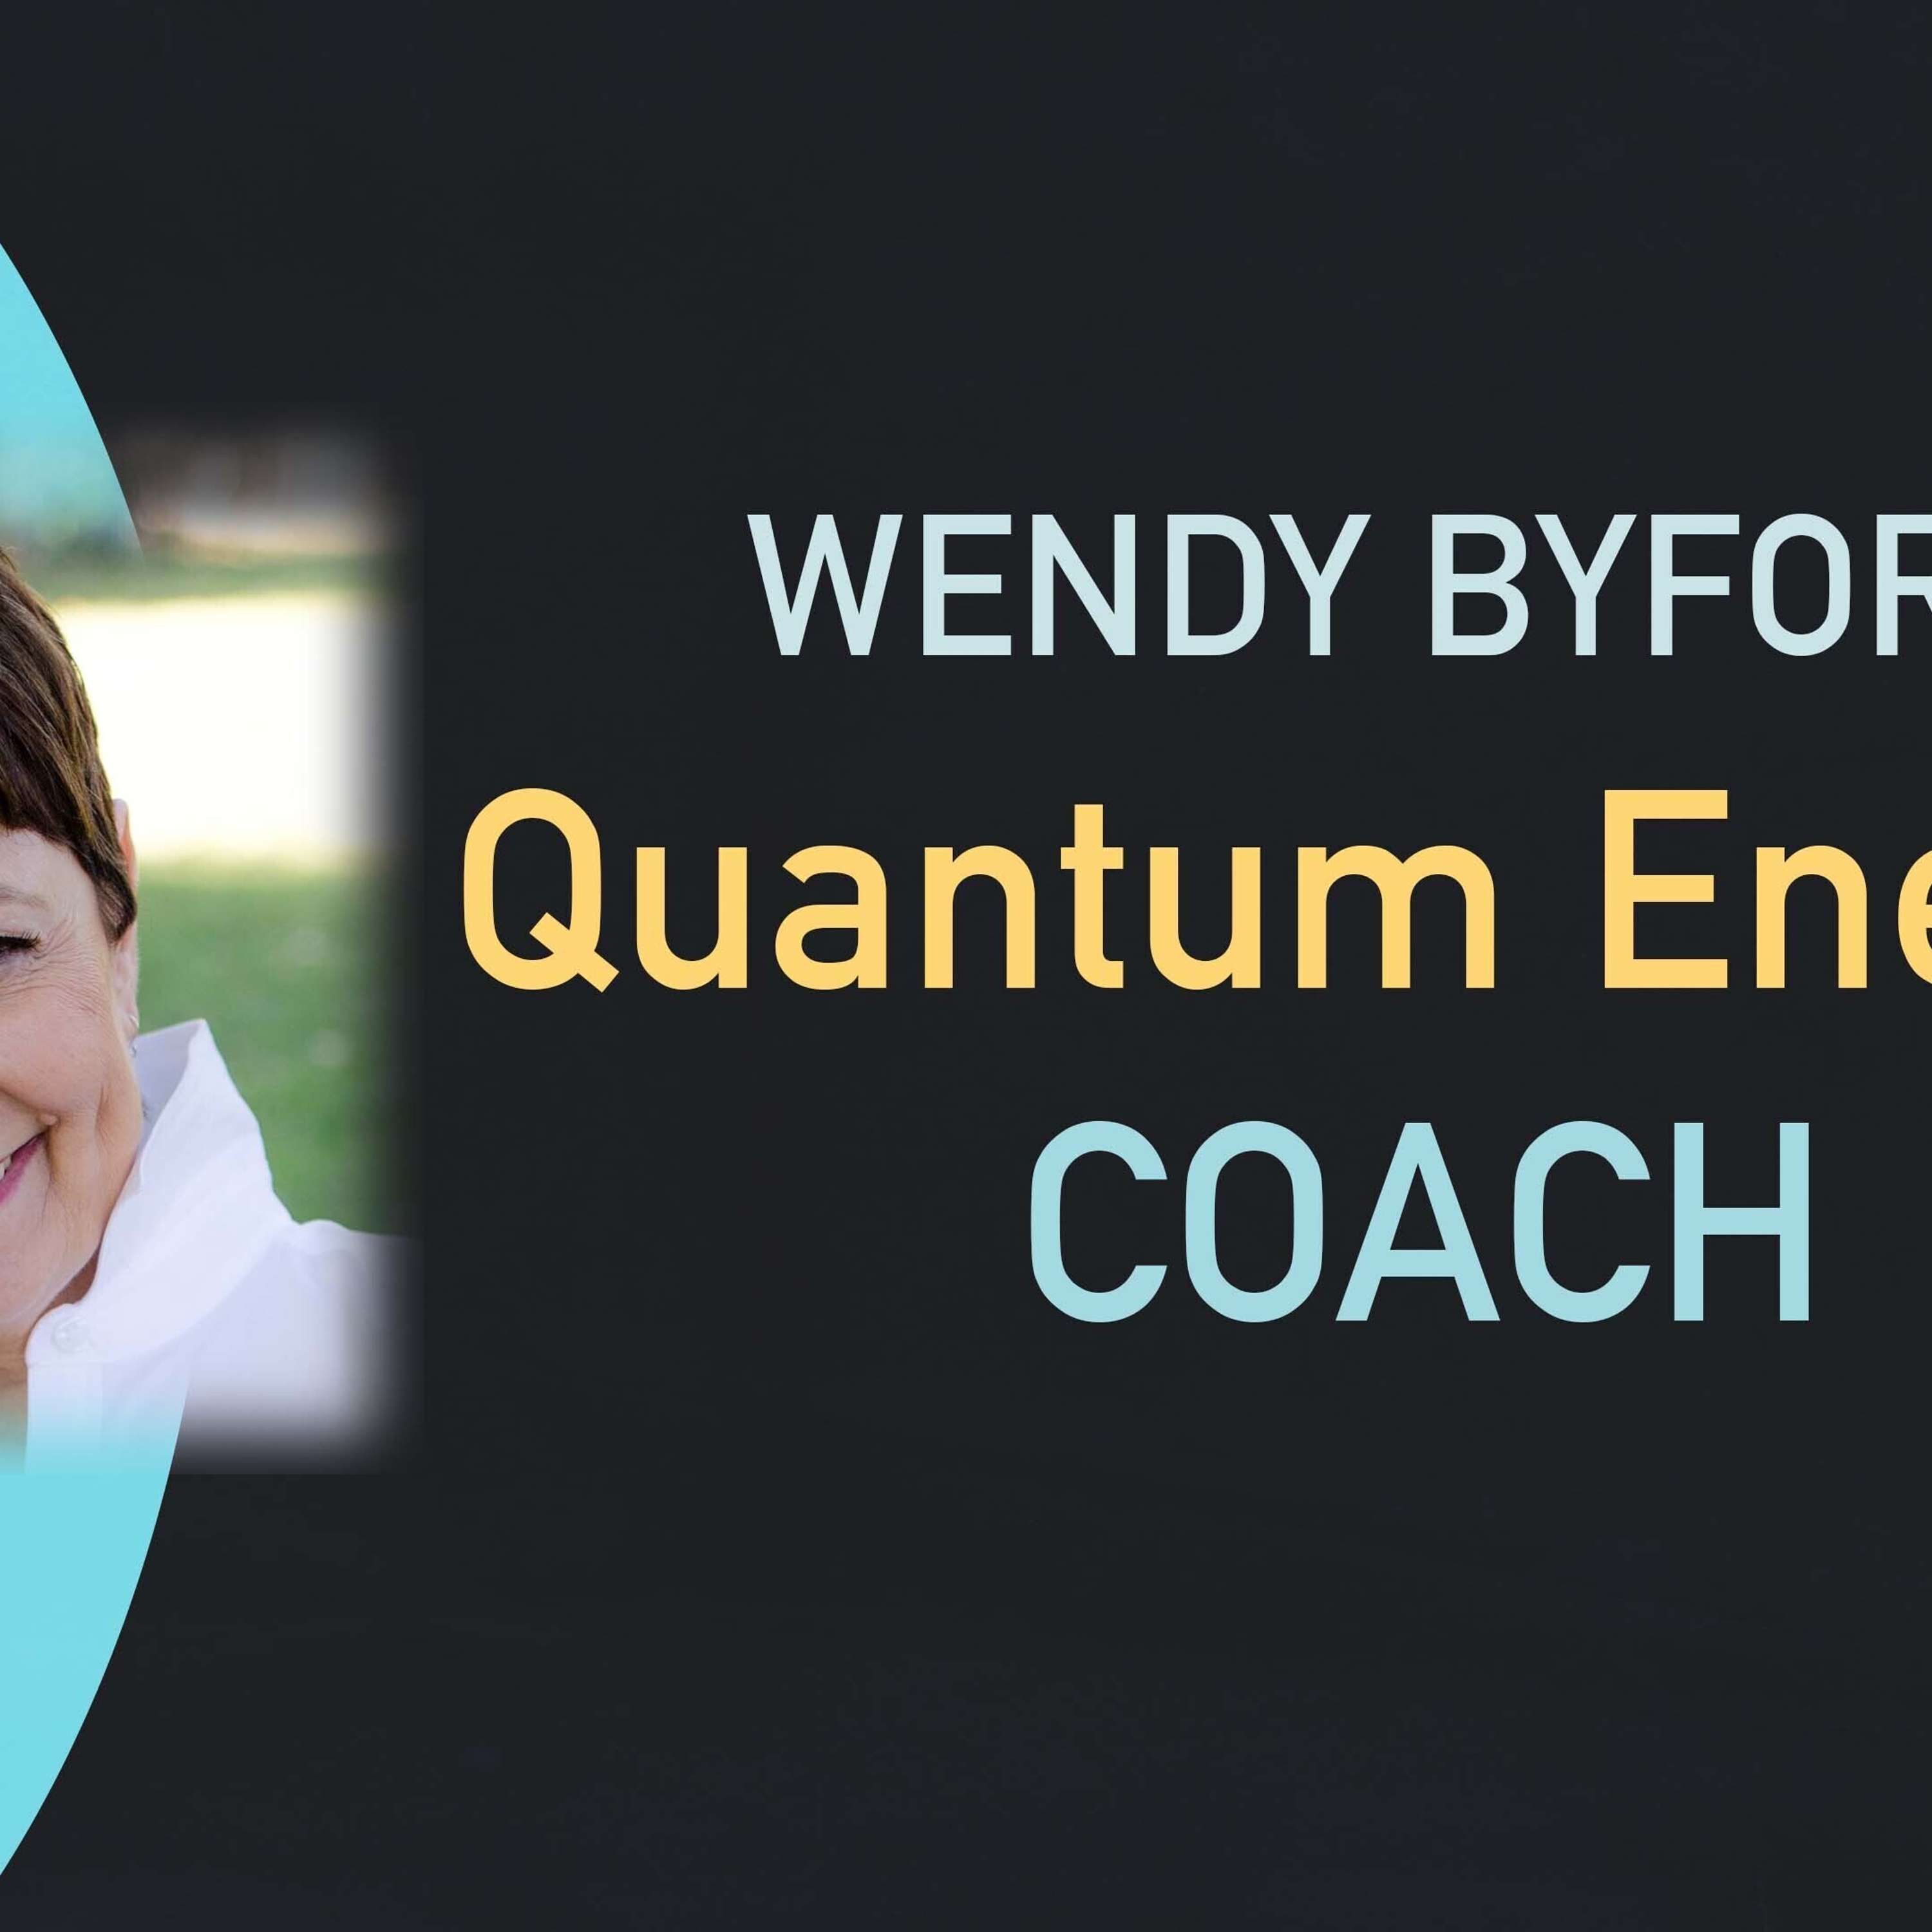 Wendy ByFord - Quantum Energy Coach!